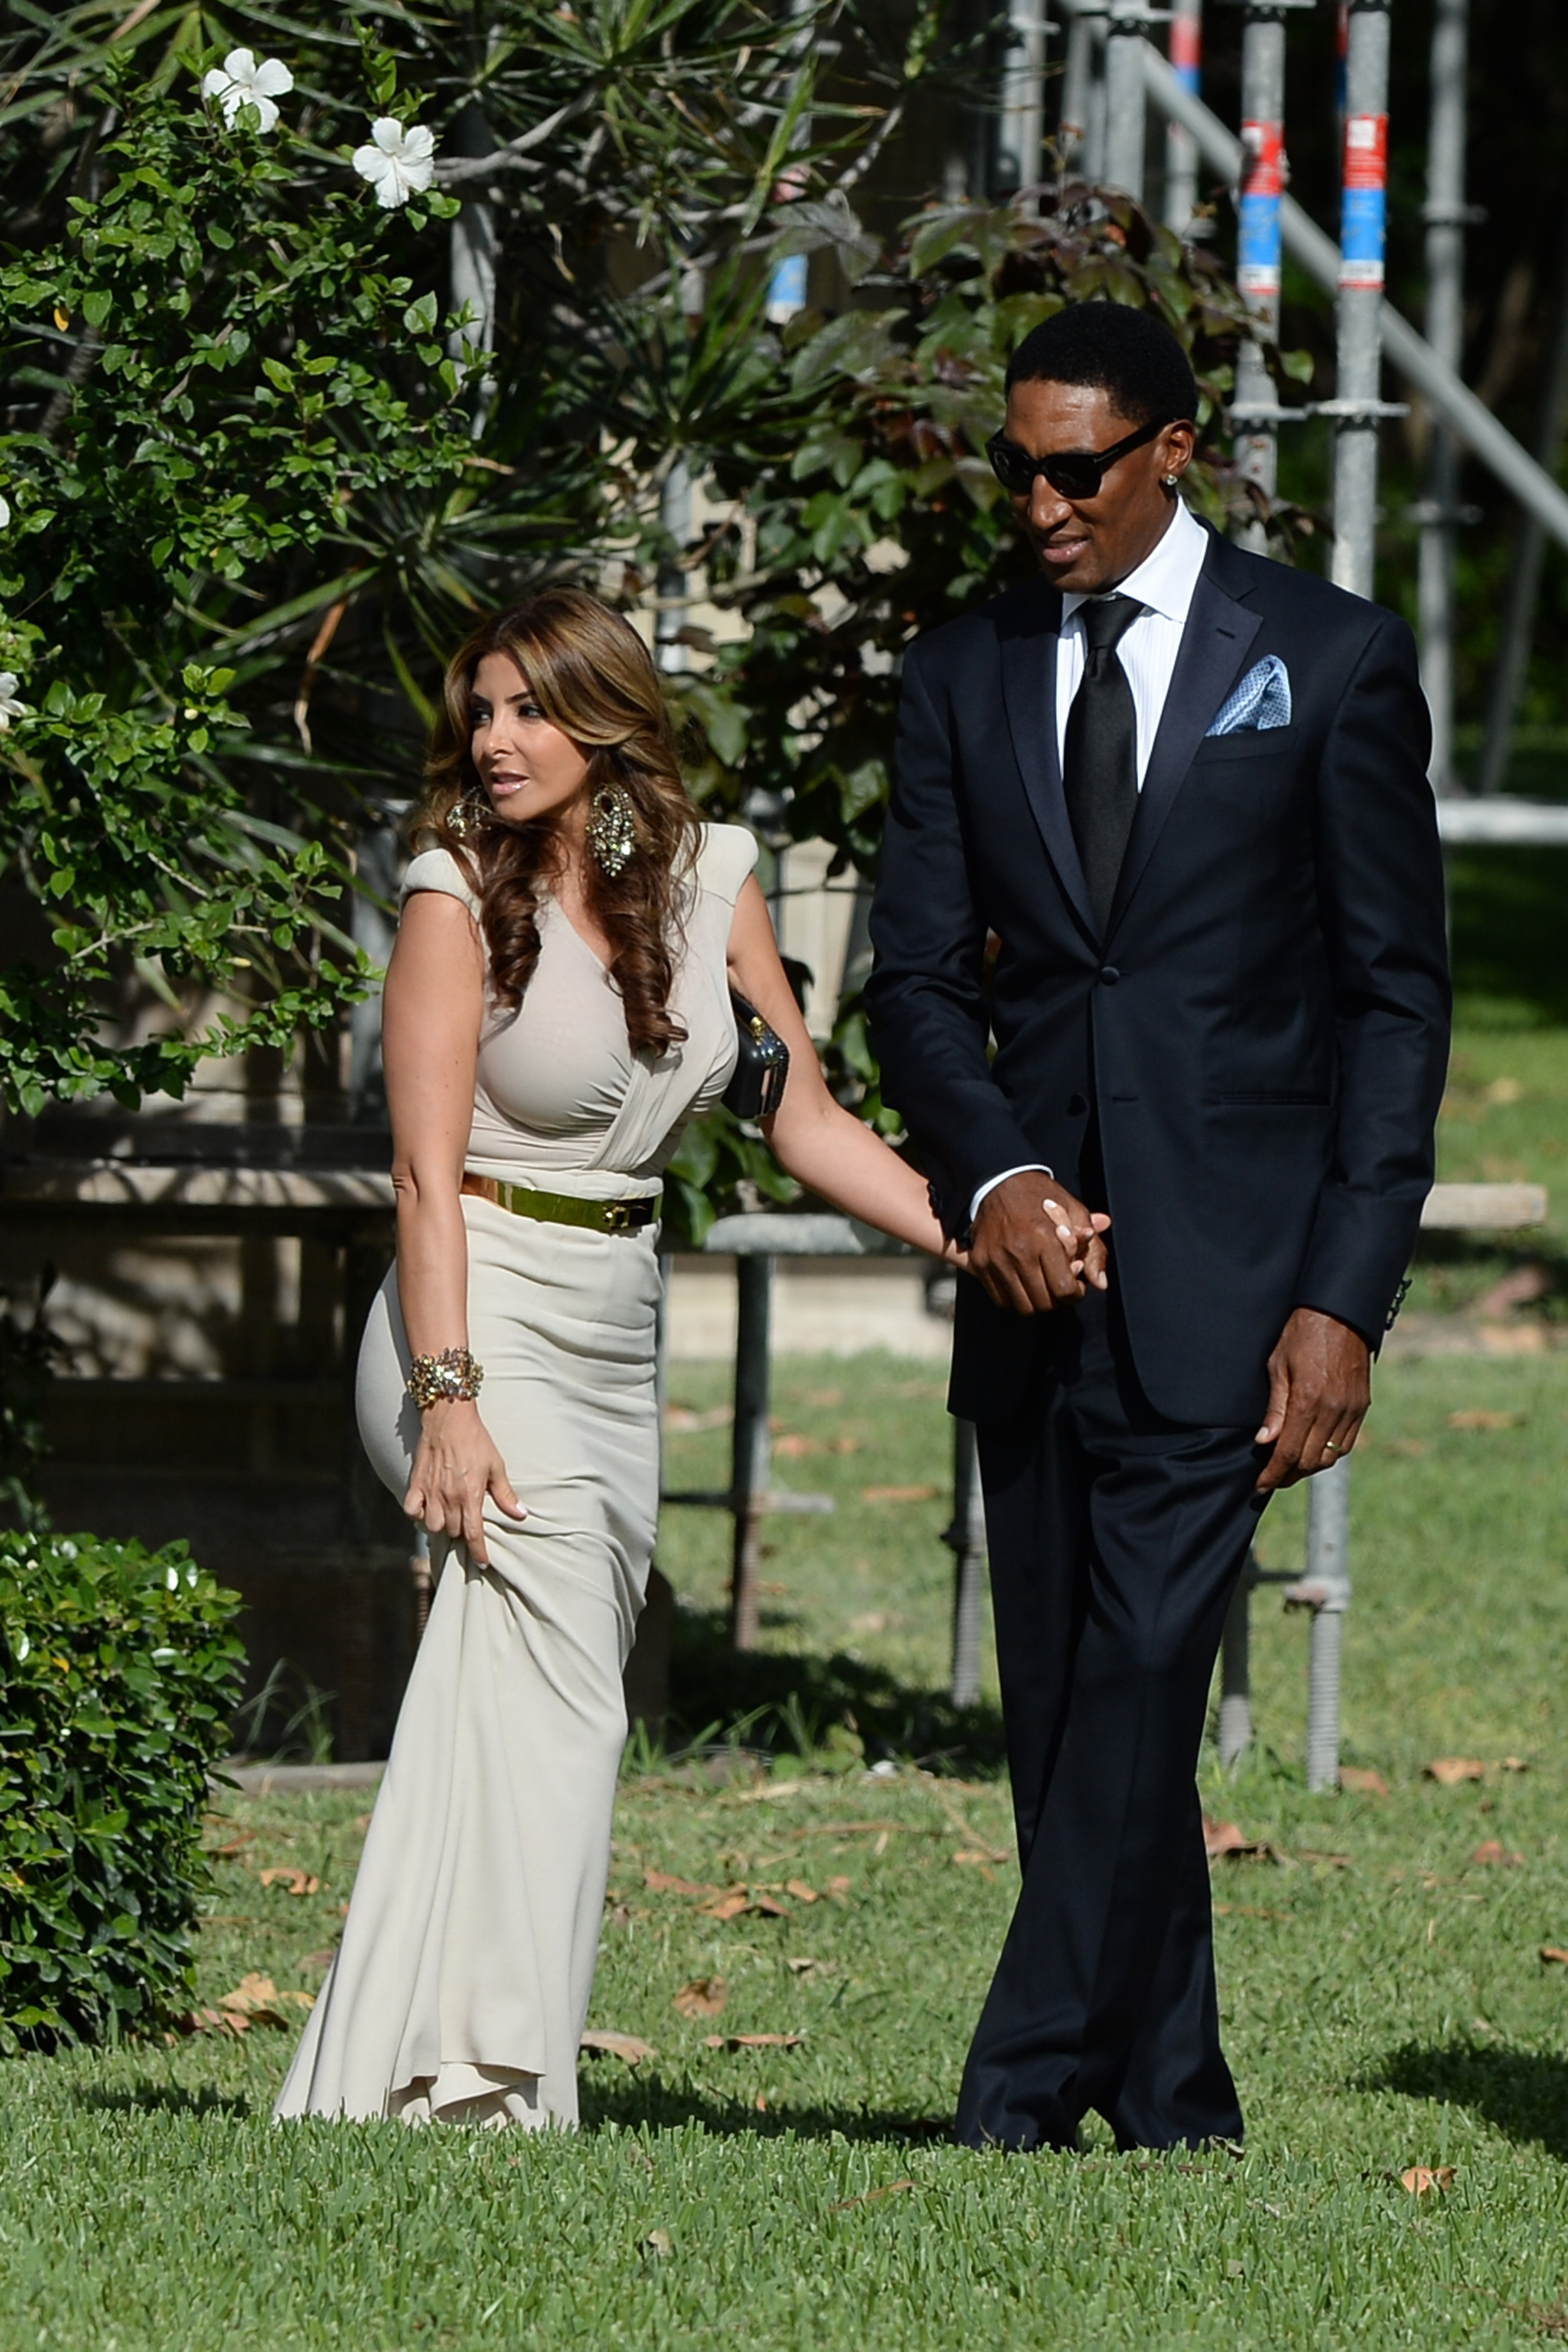 Michael Jordan Marries Long-Time Girlfriend Yvette Prieto In Front Of Family, Friends ...